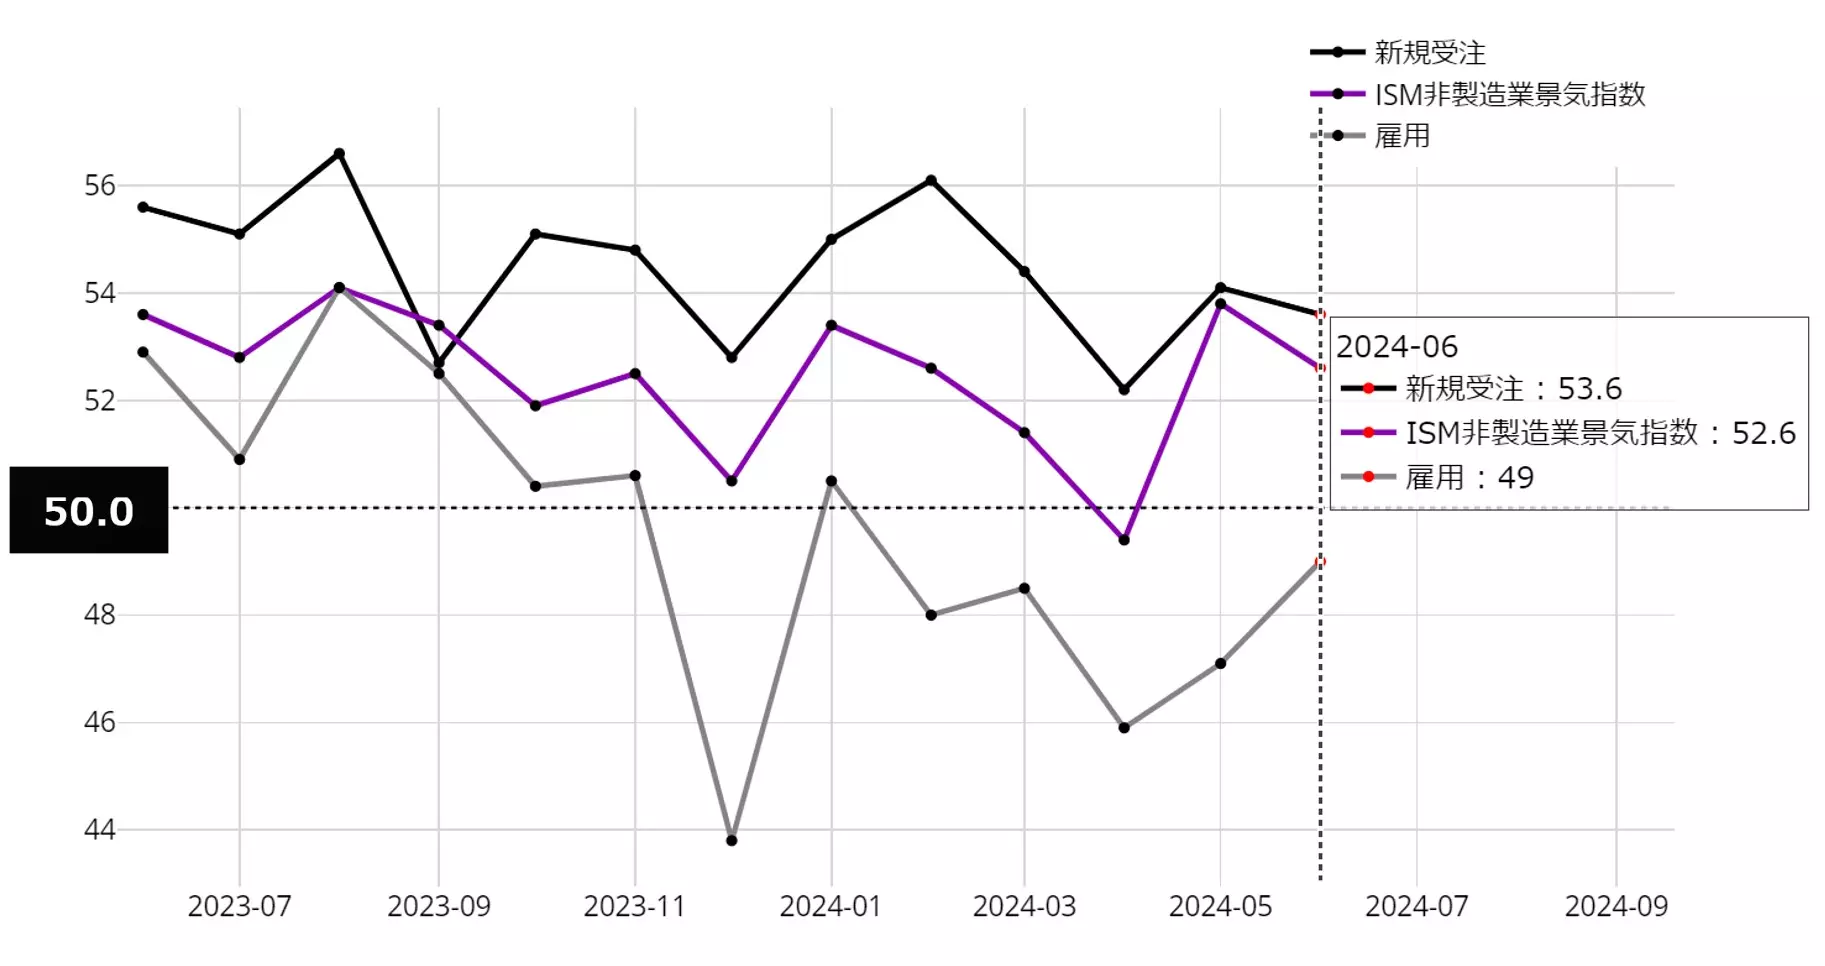 ISM非製造業景気指数の動向：23年6月以降